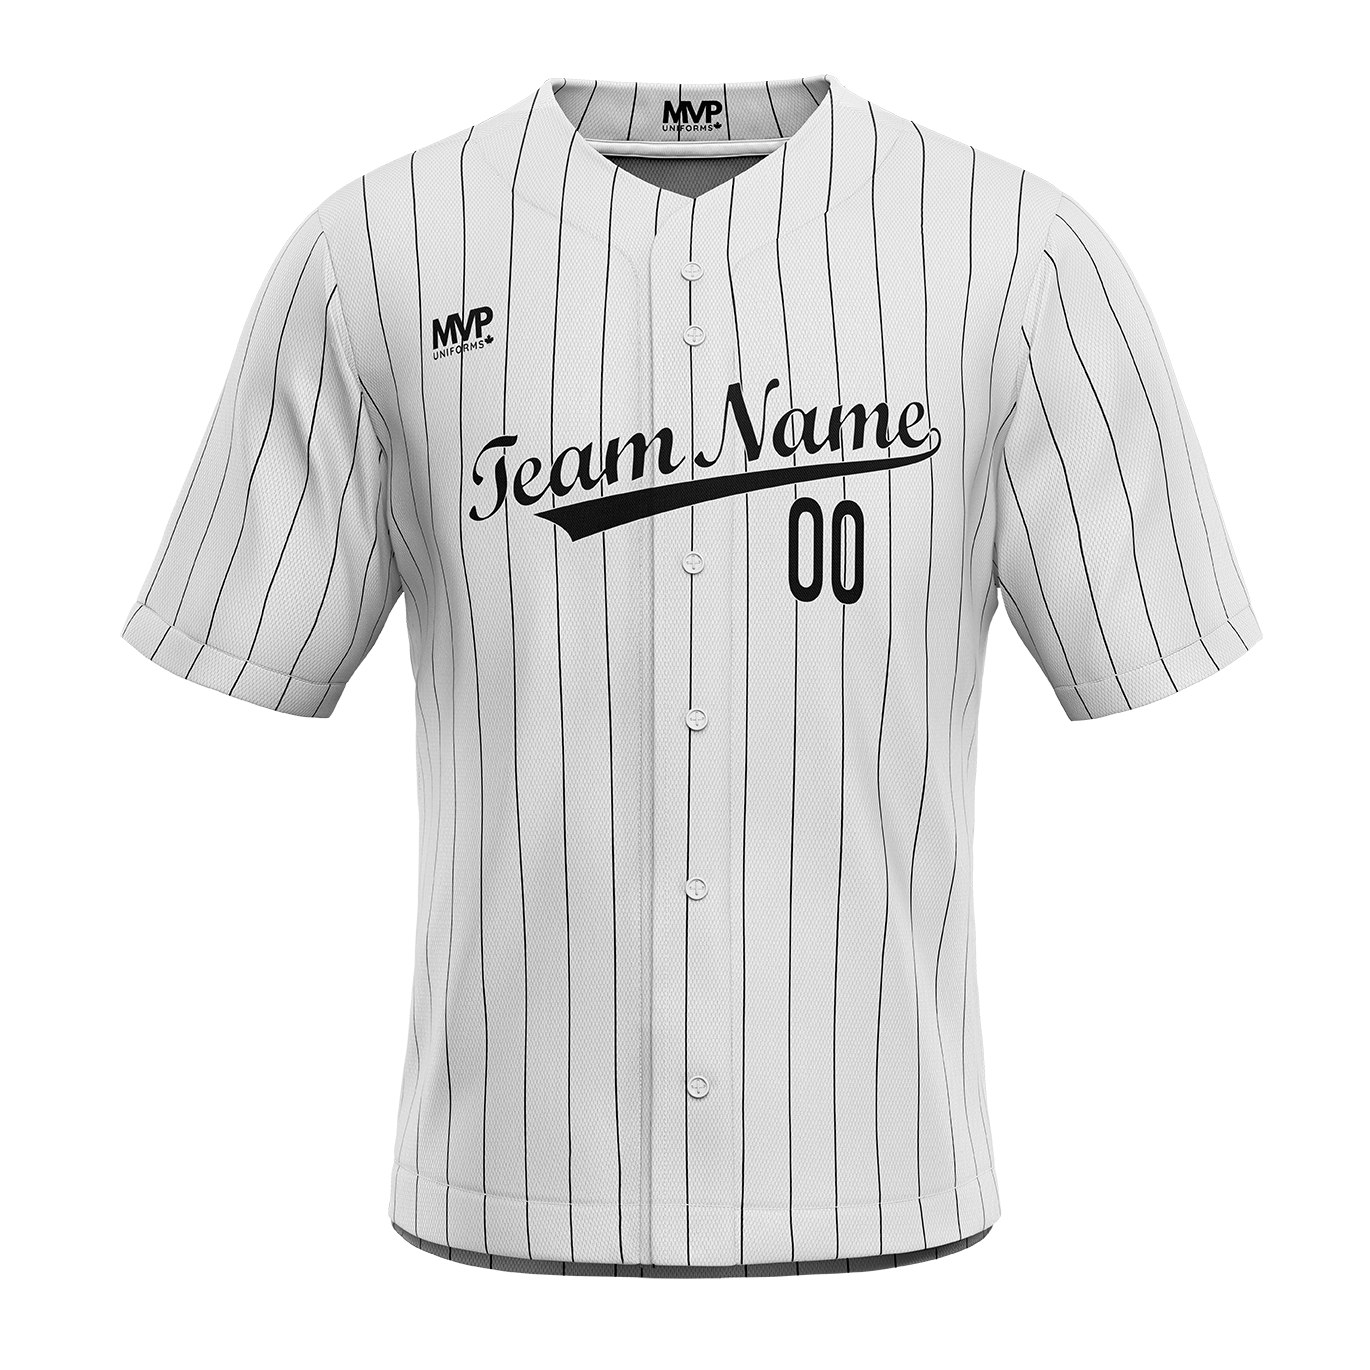 Baseball Jersey - Full Button - White w Stripes